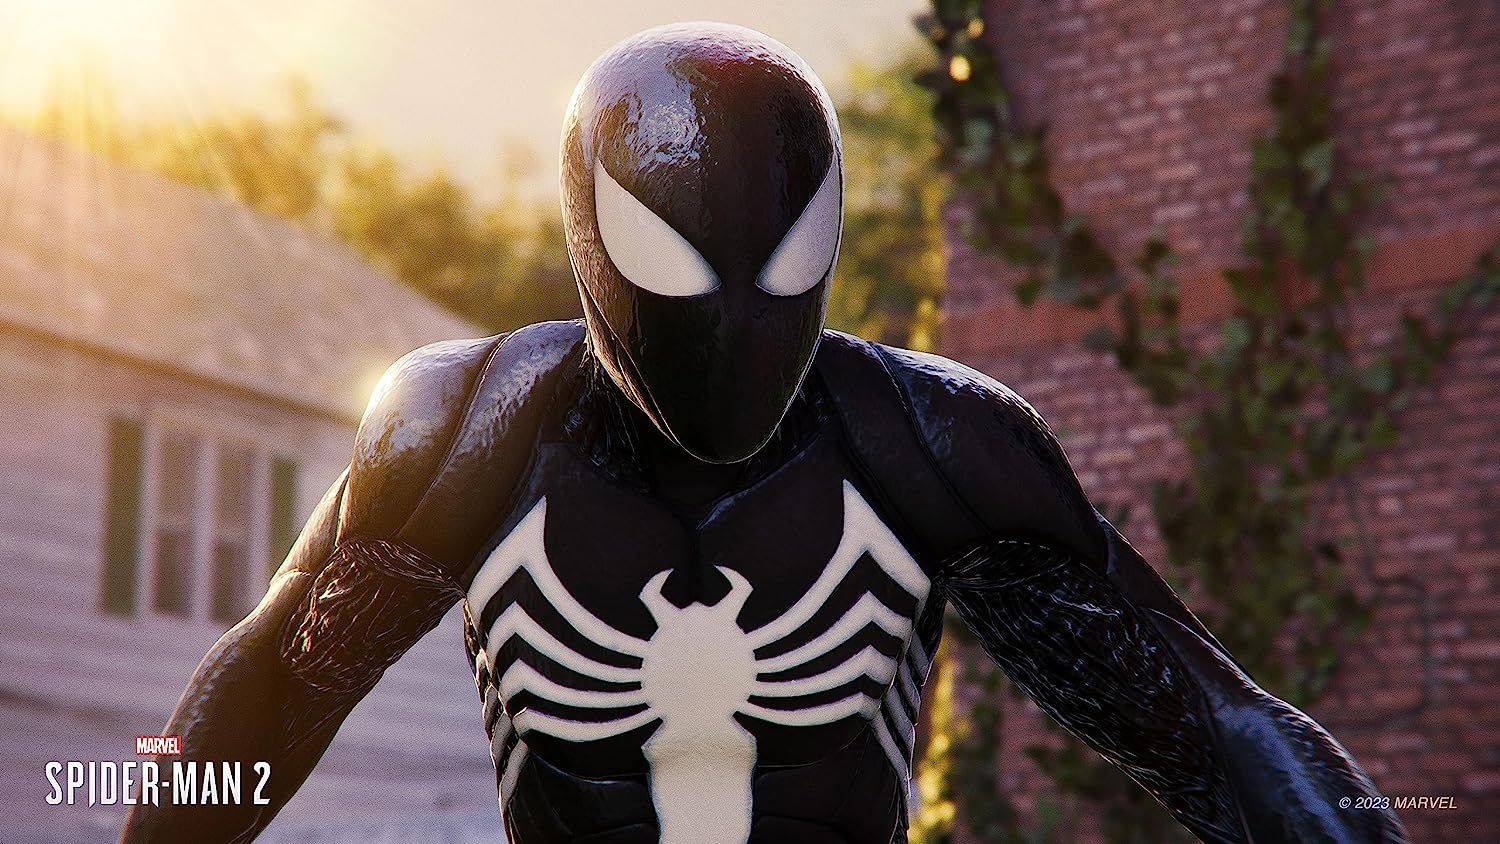 Both Are PEAK” – Marvel's Spider-Man 2 Fans Reveal Their Wild Take